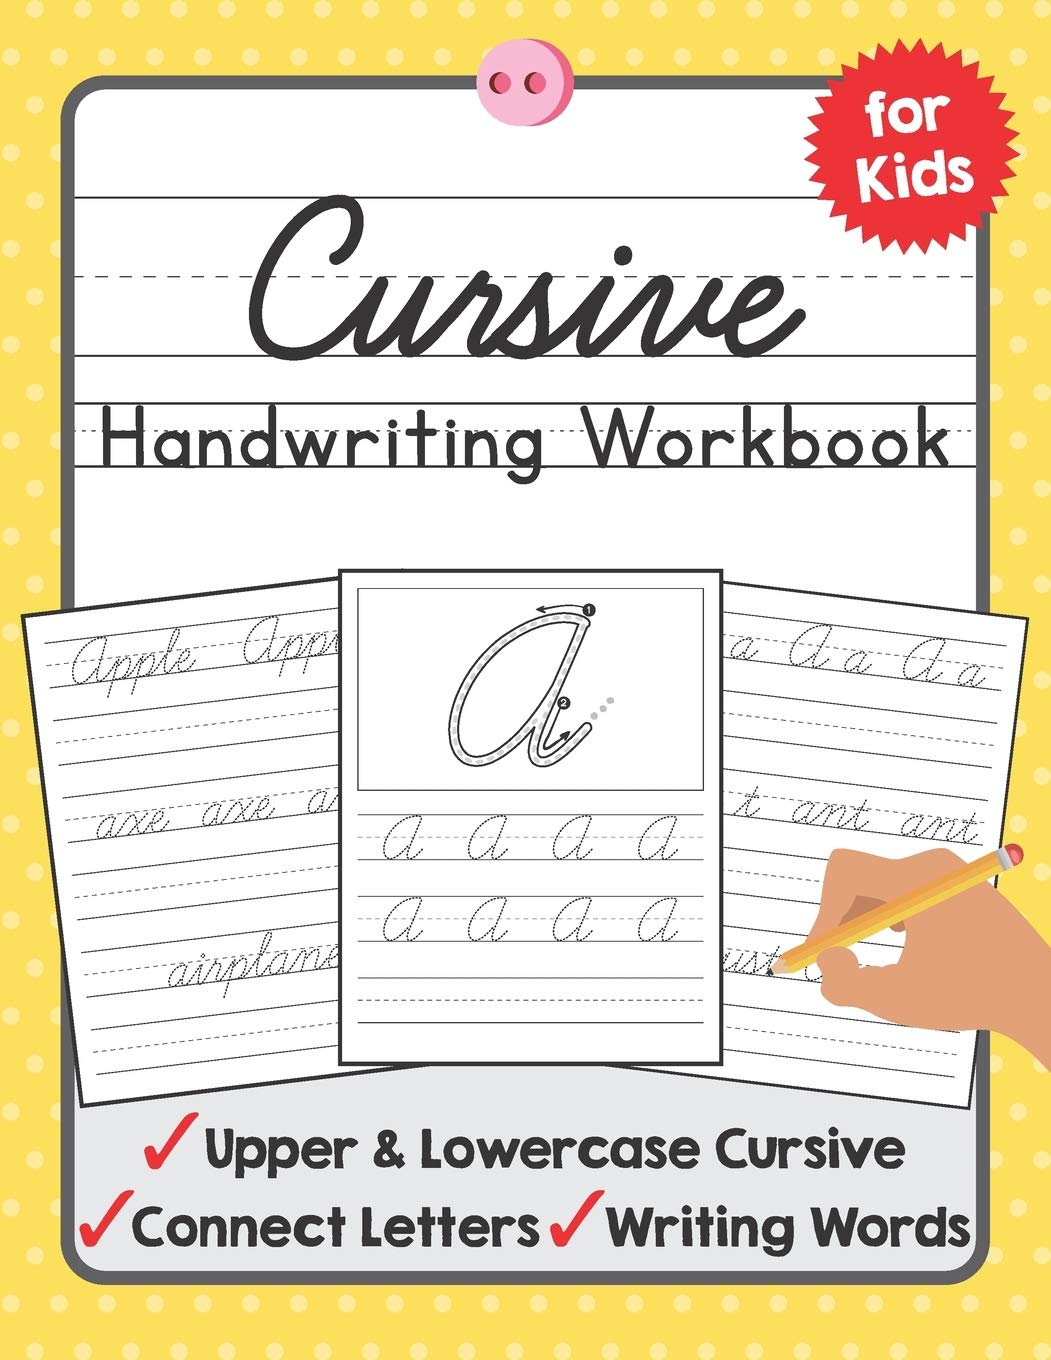 Worksheets : Cursive Handwriting Workbook For Kids Beginning